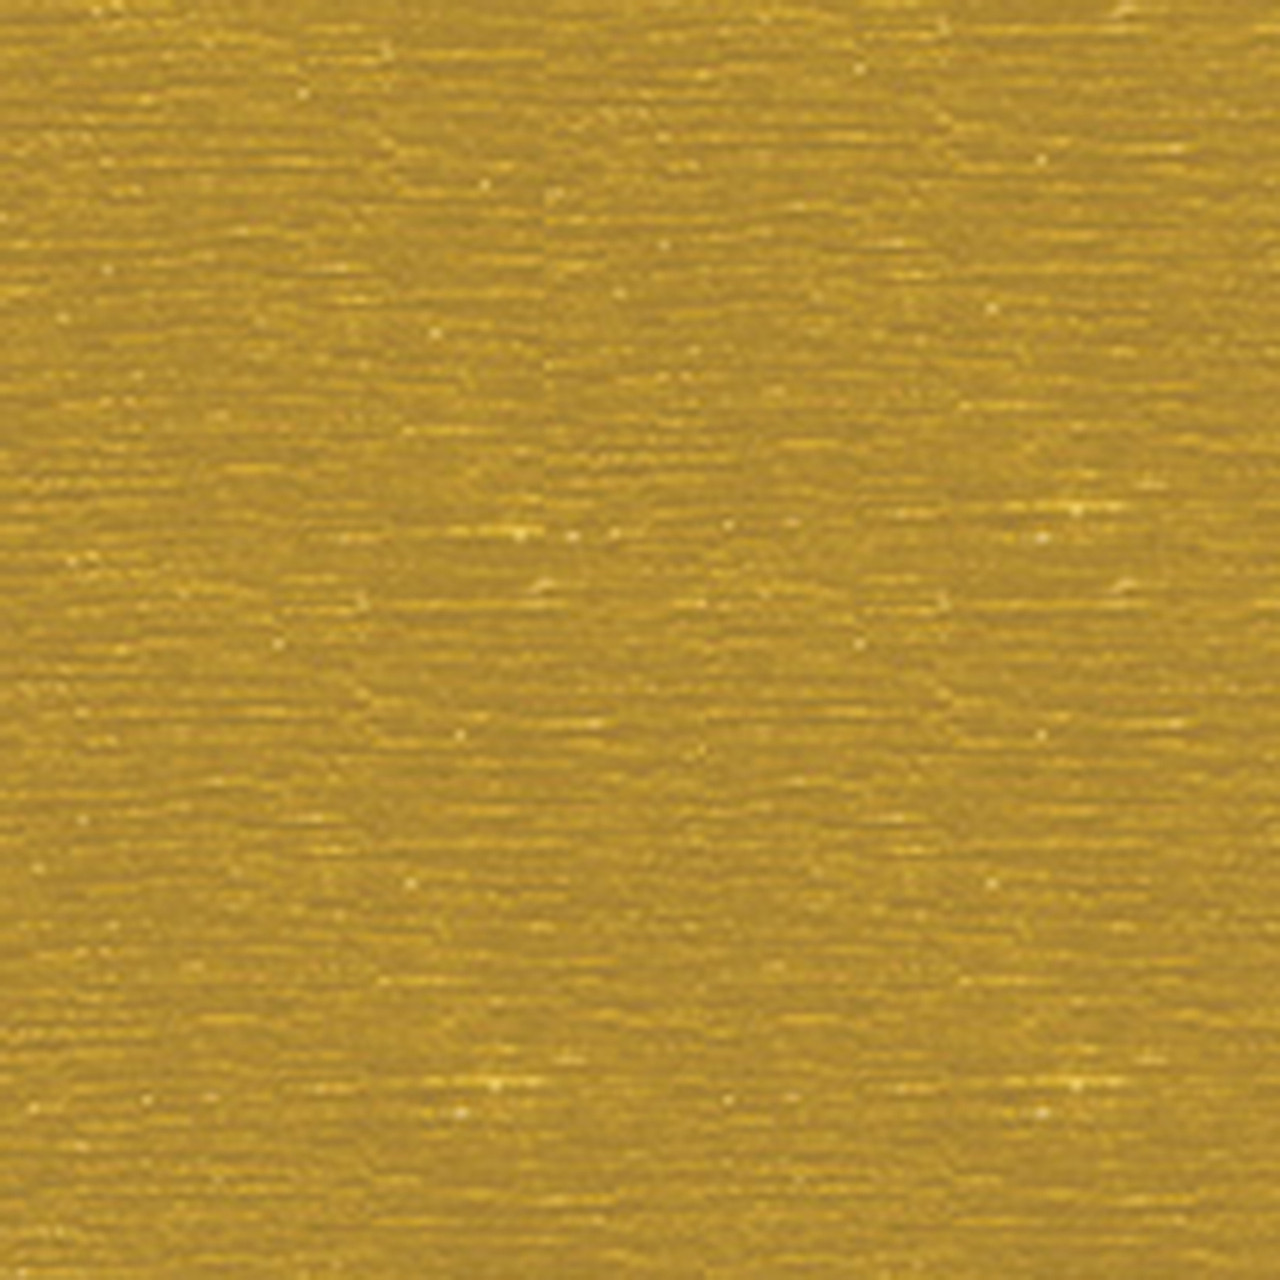 Foil Cardstock Textured Gold 12 x 12 Sheets Bulk Pack of 25